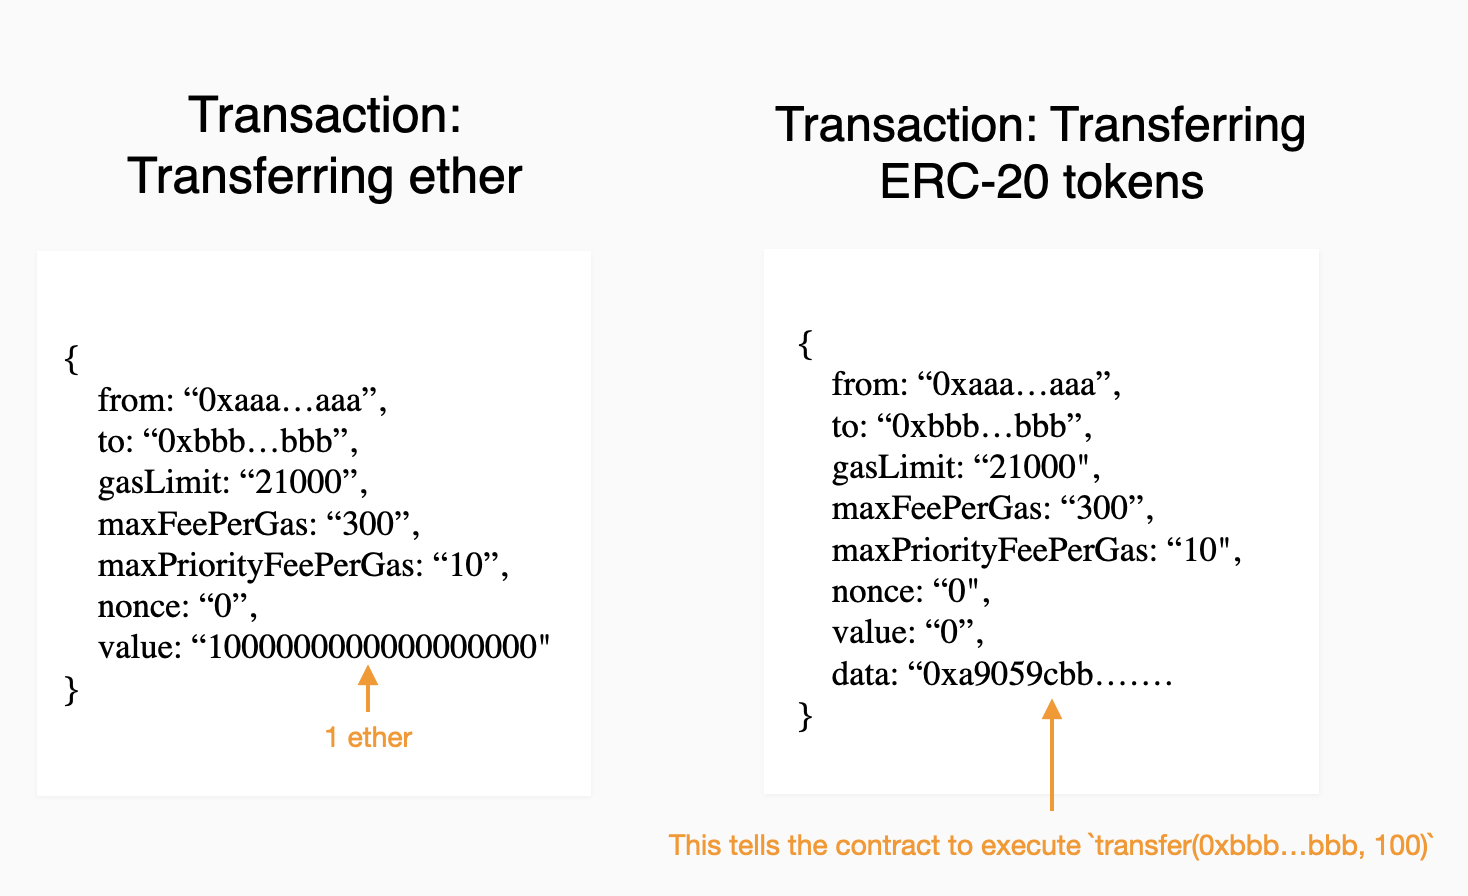 Comparing ether transfer vs ERC-20 transfer